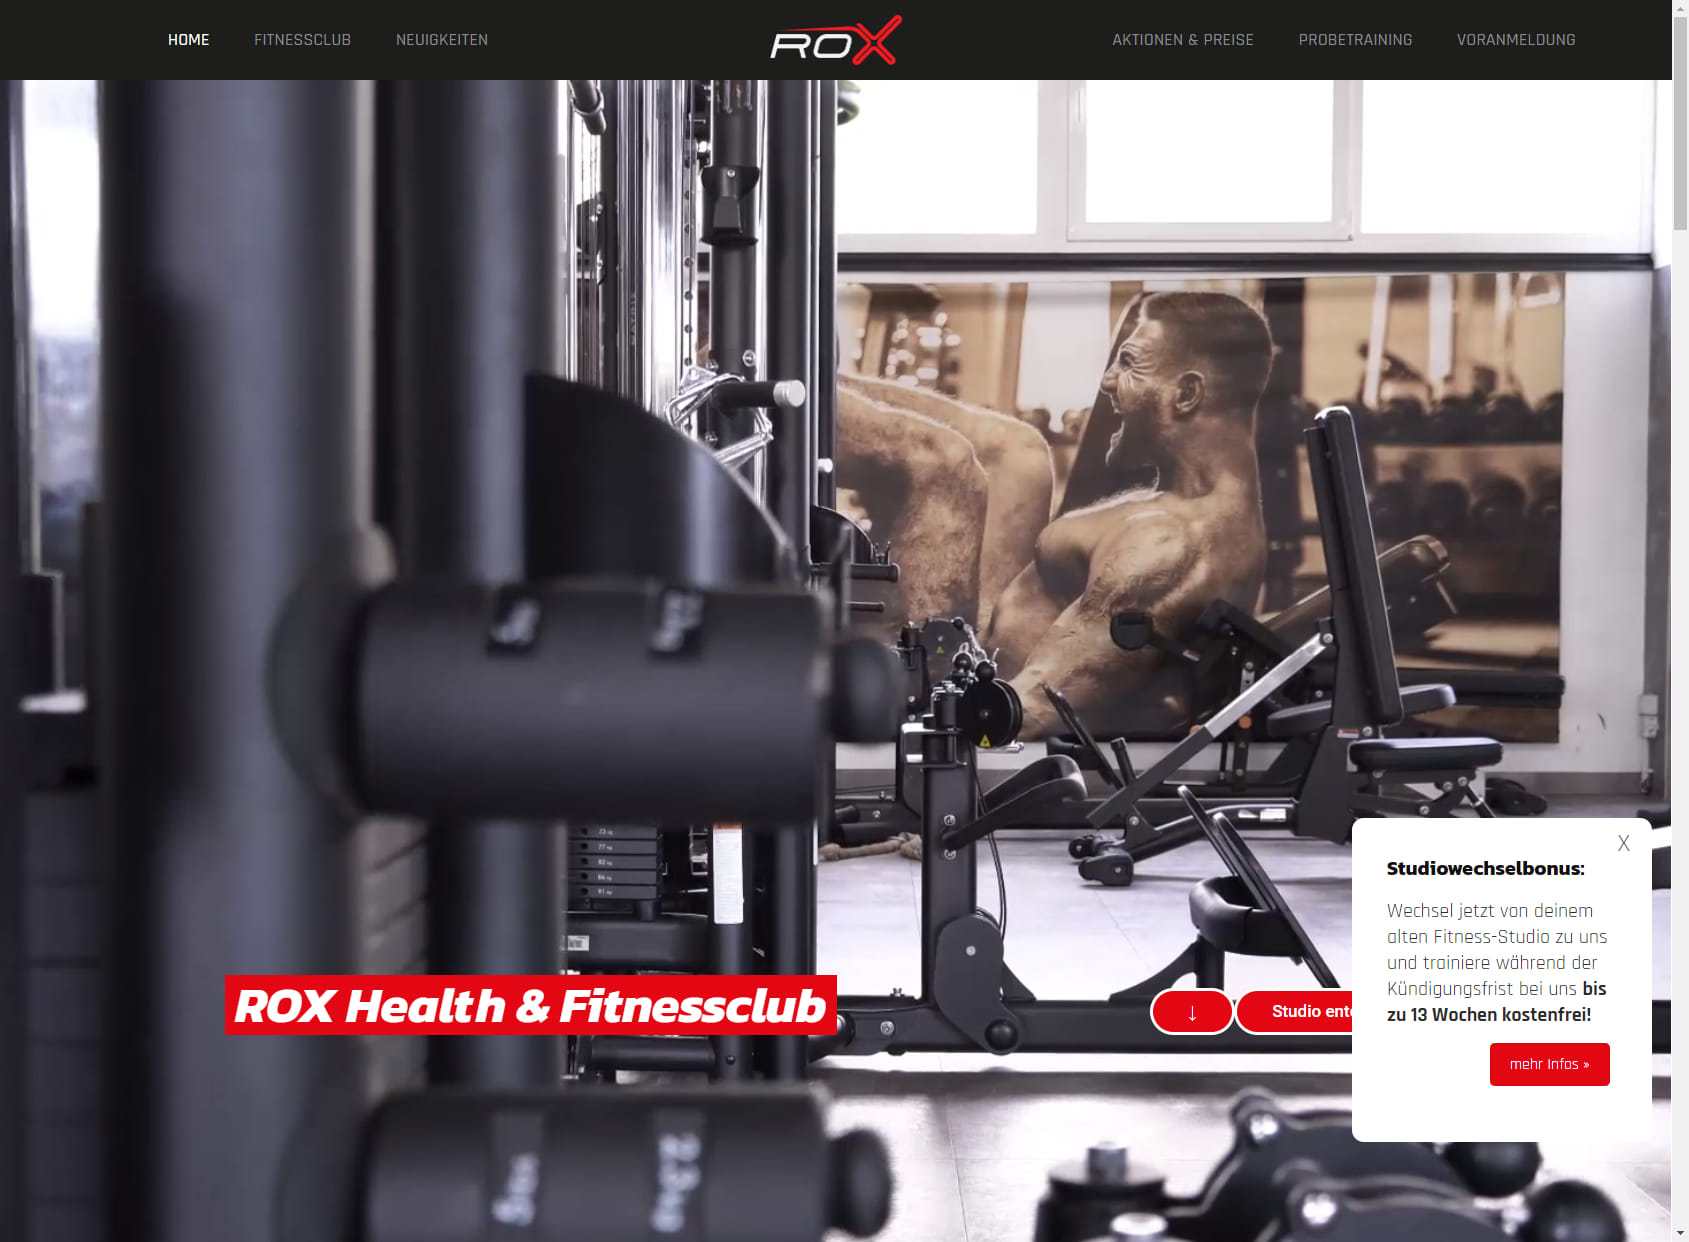 ROX Health & Fitnessclub